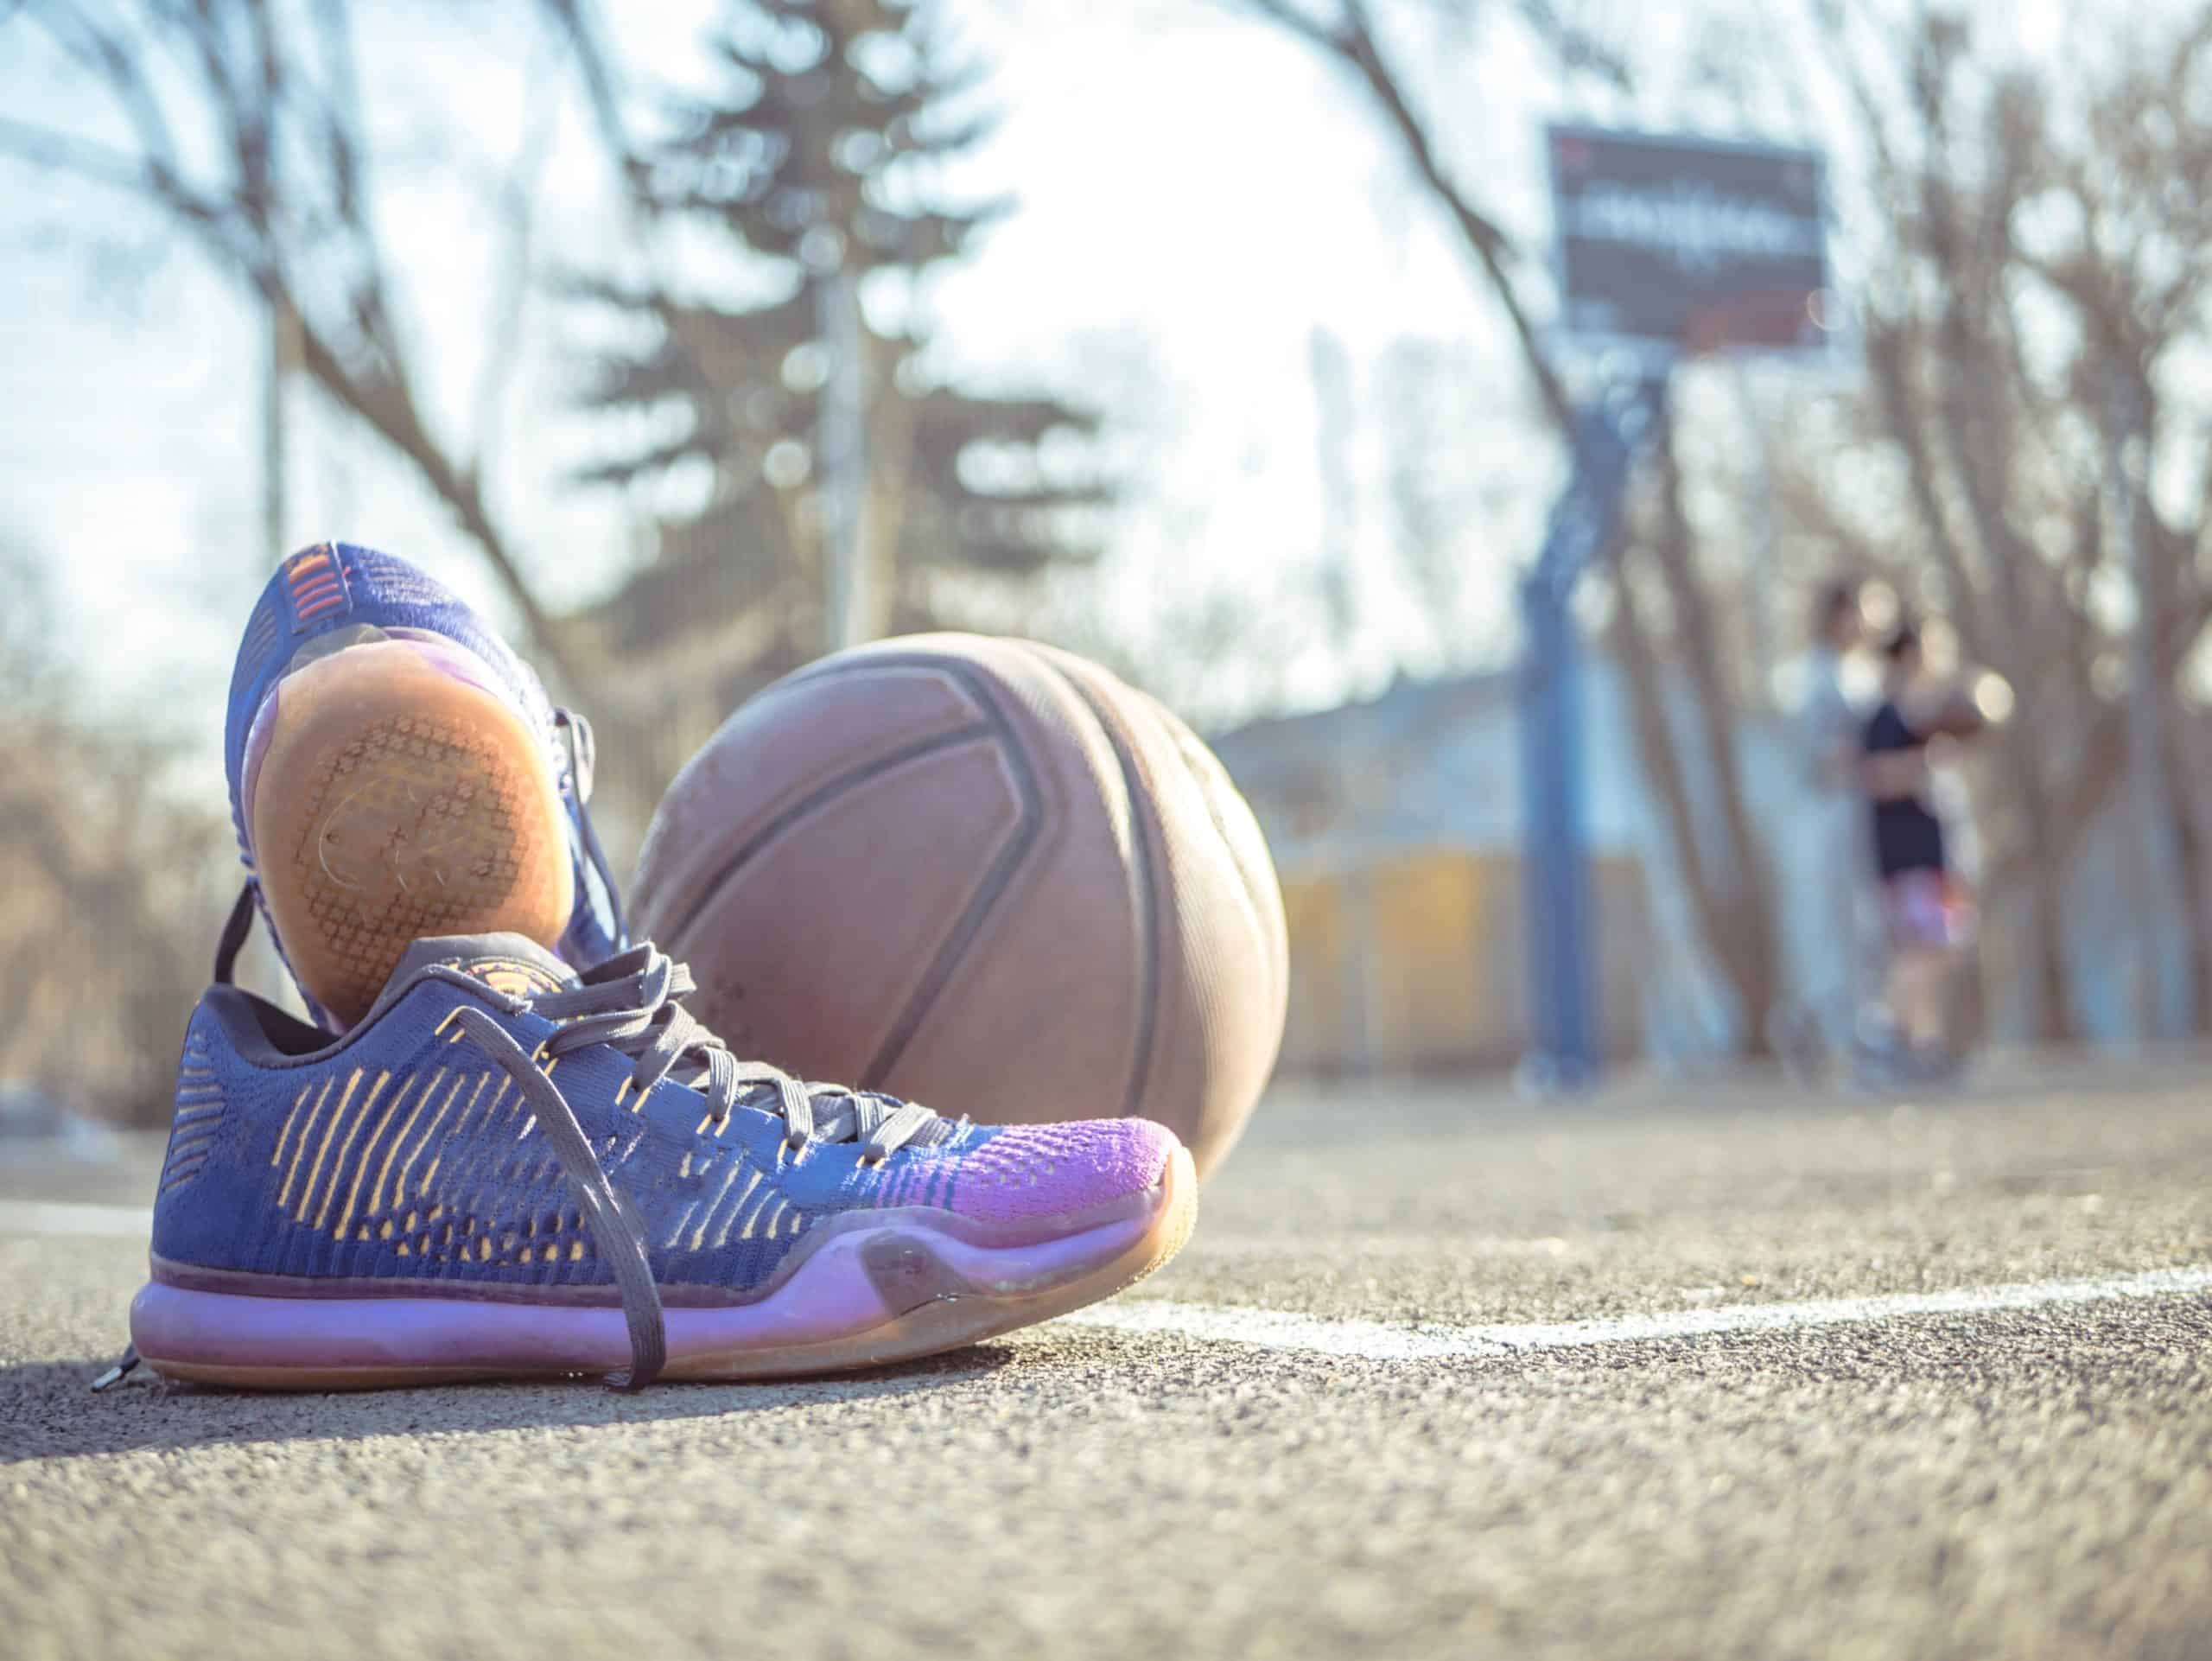 basketball shoes slide on court